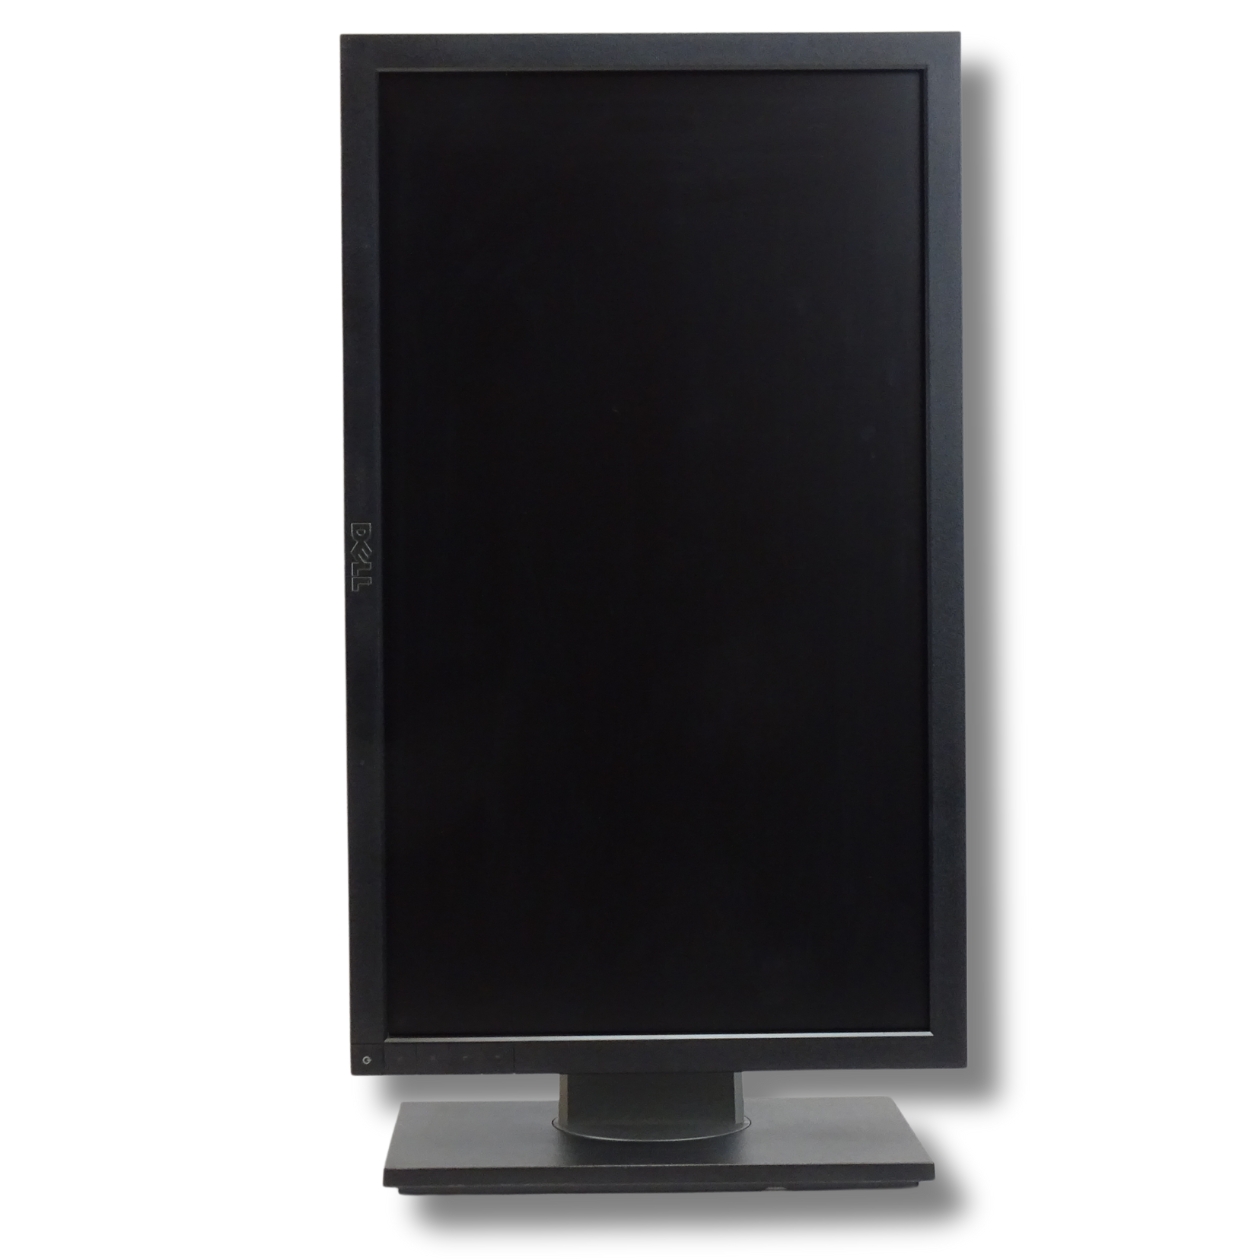 Dell P 2011Ht Monitor - 20,0 Zoll - 1600 x 900 - 5 ms - Schwarz/Silber  - Sehr gut